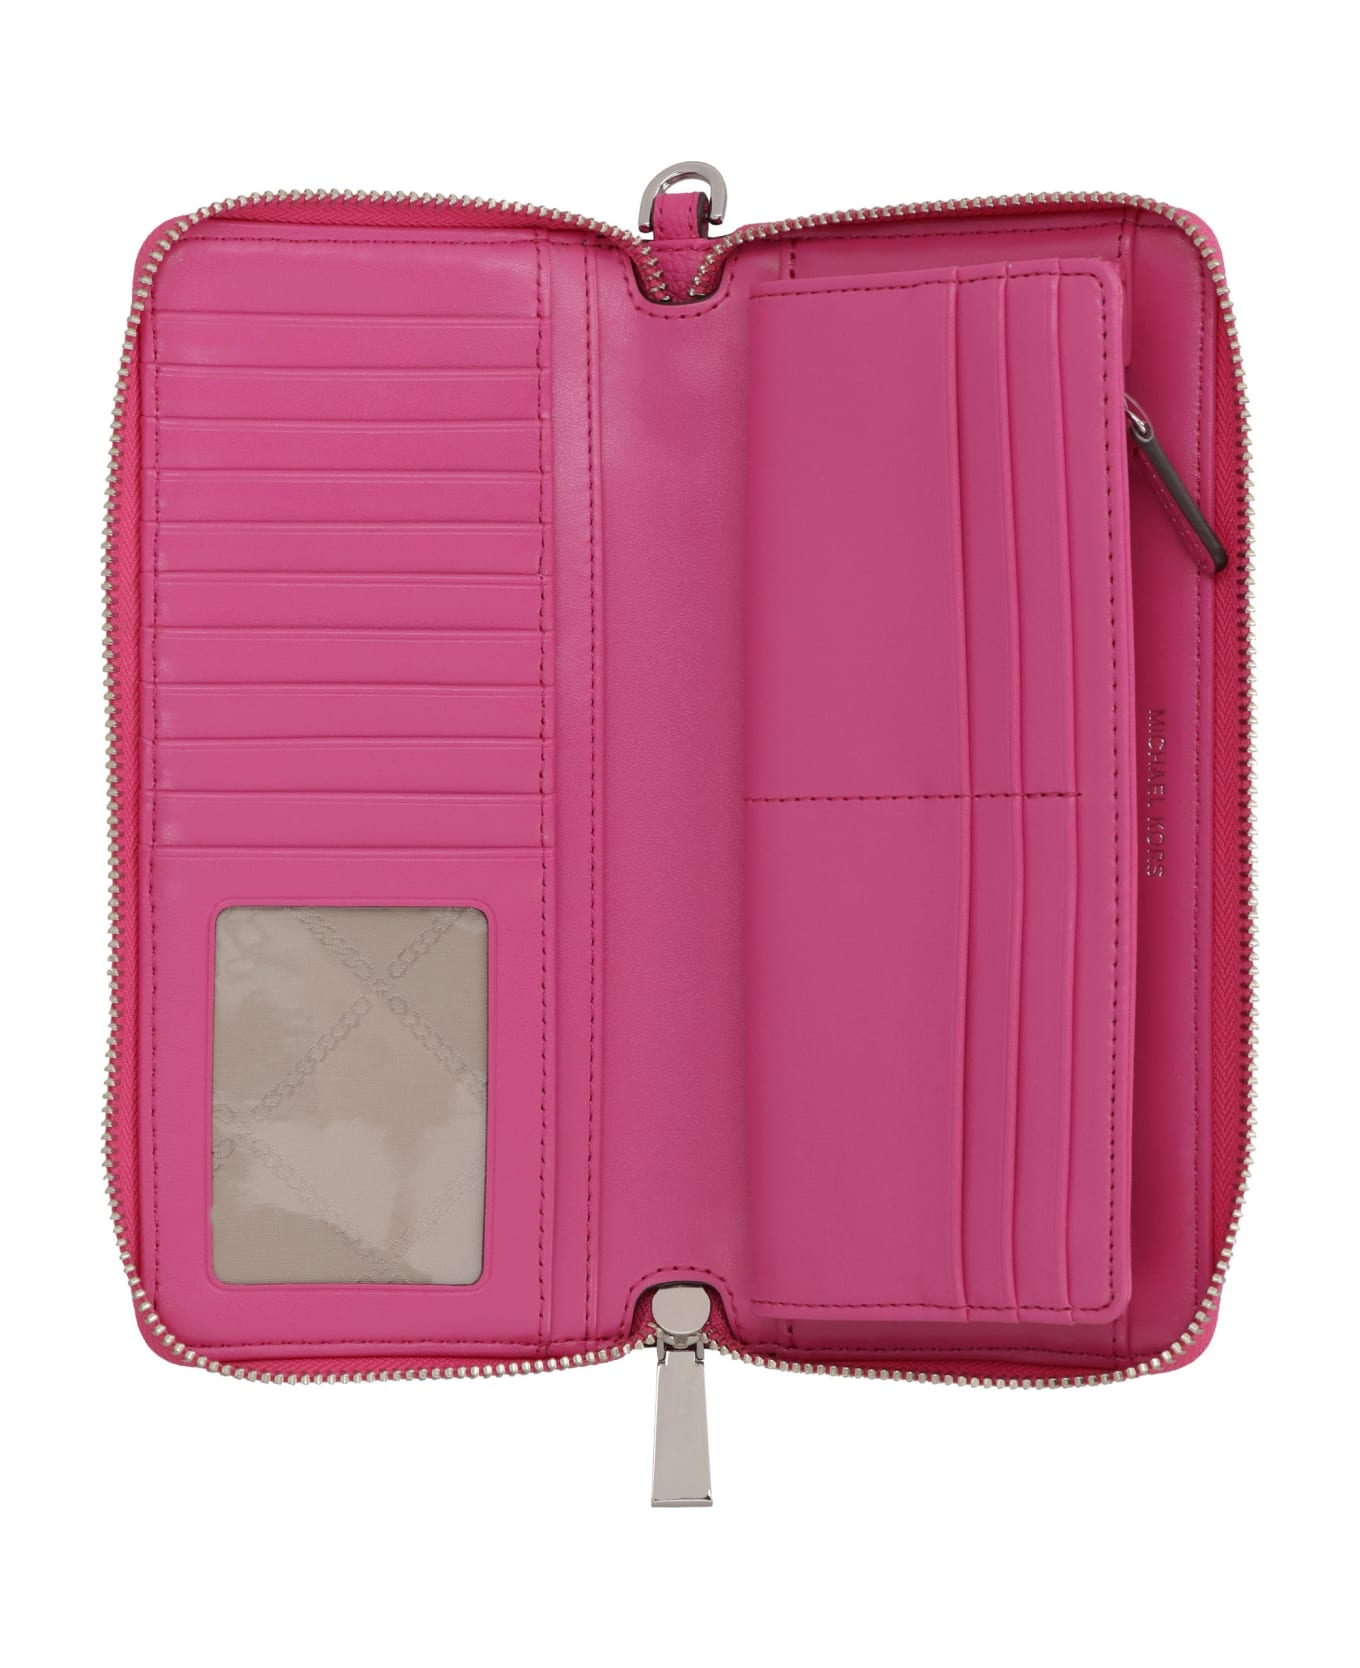 MICHAEL Michael Kors Jet Set Continental Leather Wallet - Pink 財布